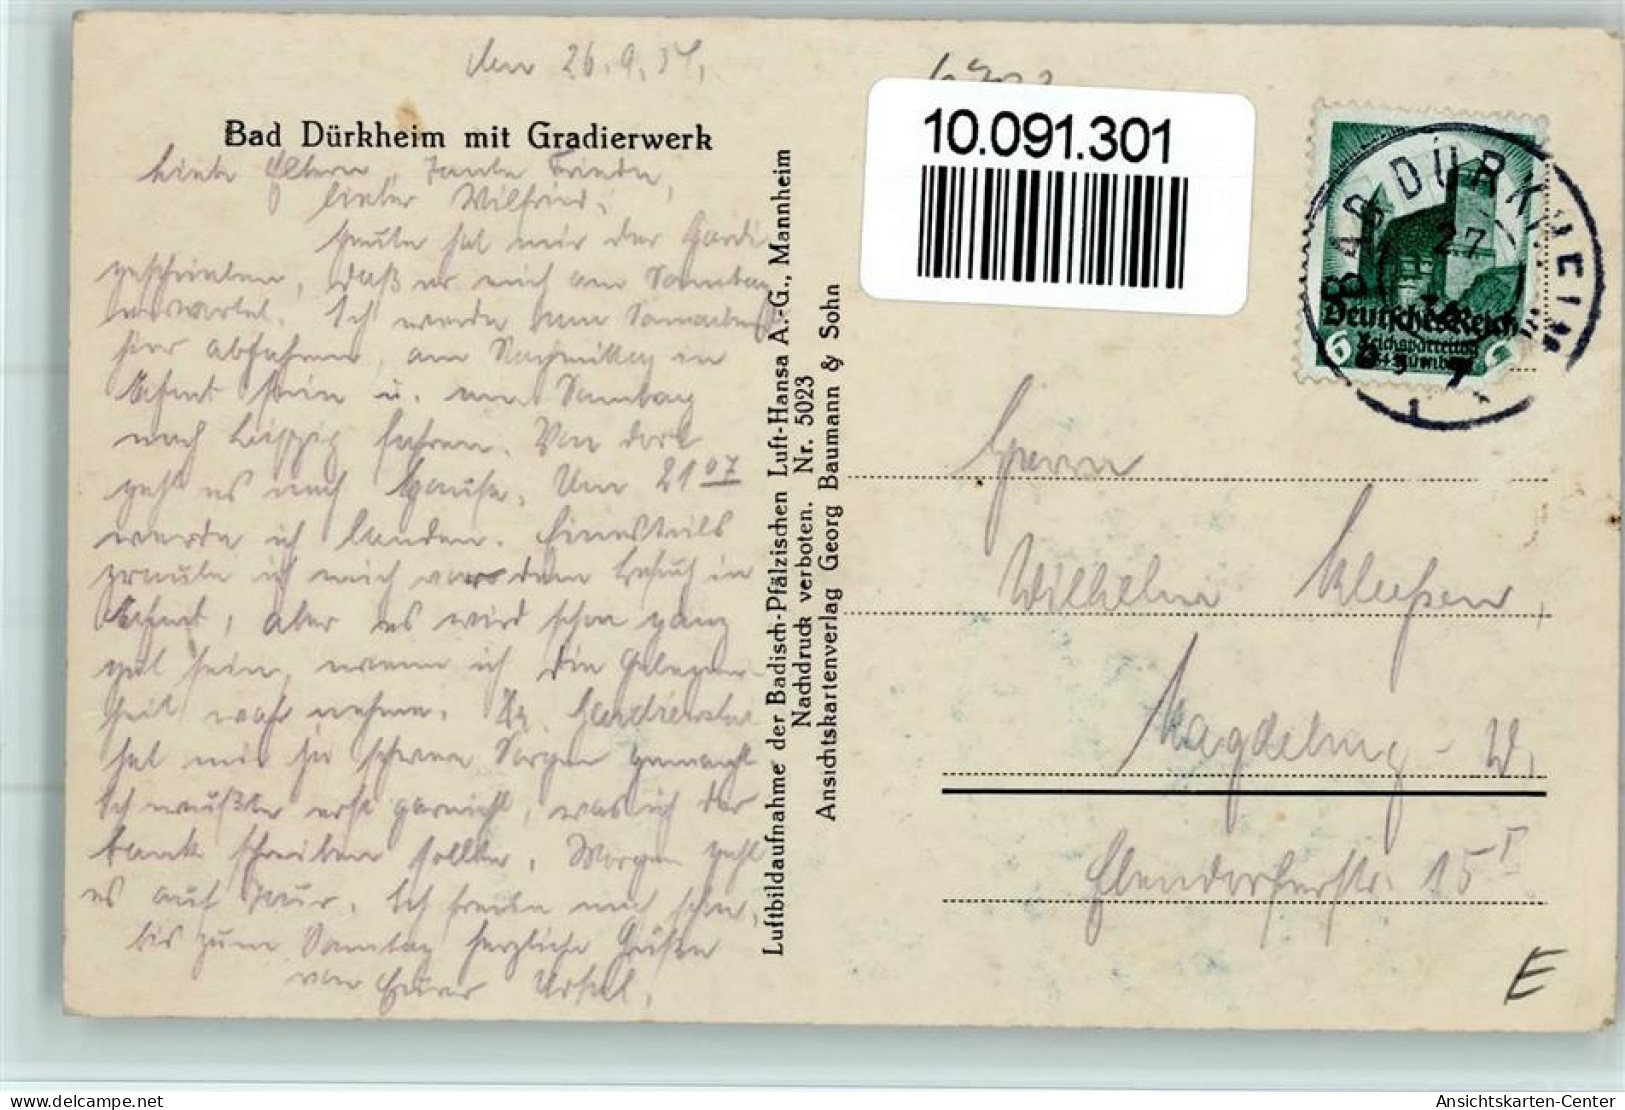 10091301 - Bad Duerkheim - Bad Duerkheim